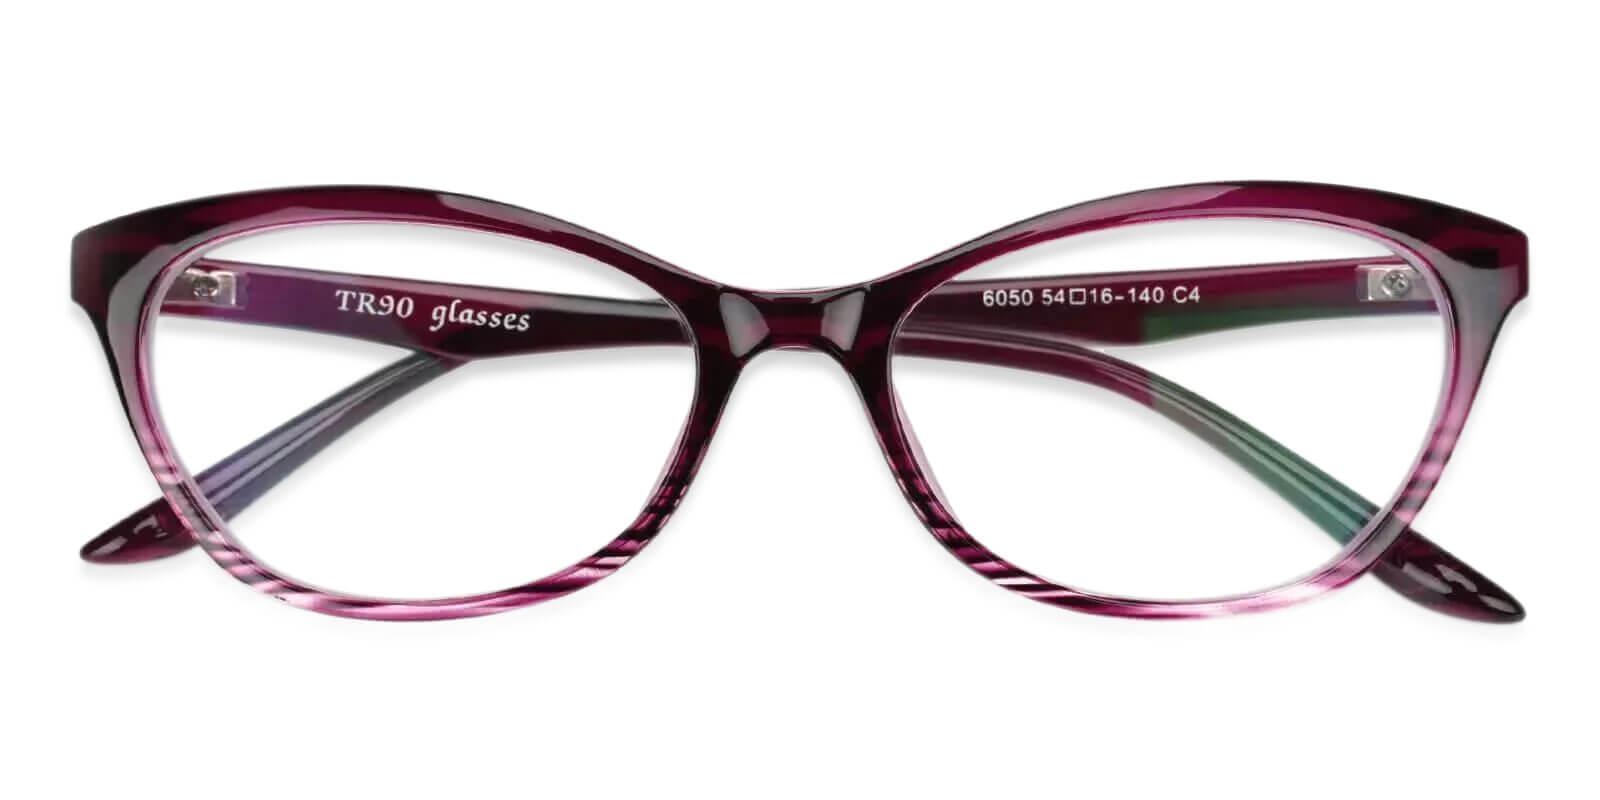 Arya Purple TR UniversalBridgeFit , Eyeglasses Frames from ABBE Glasses